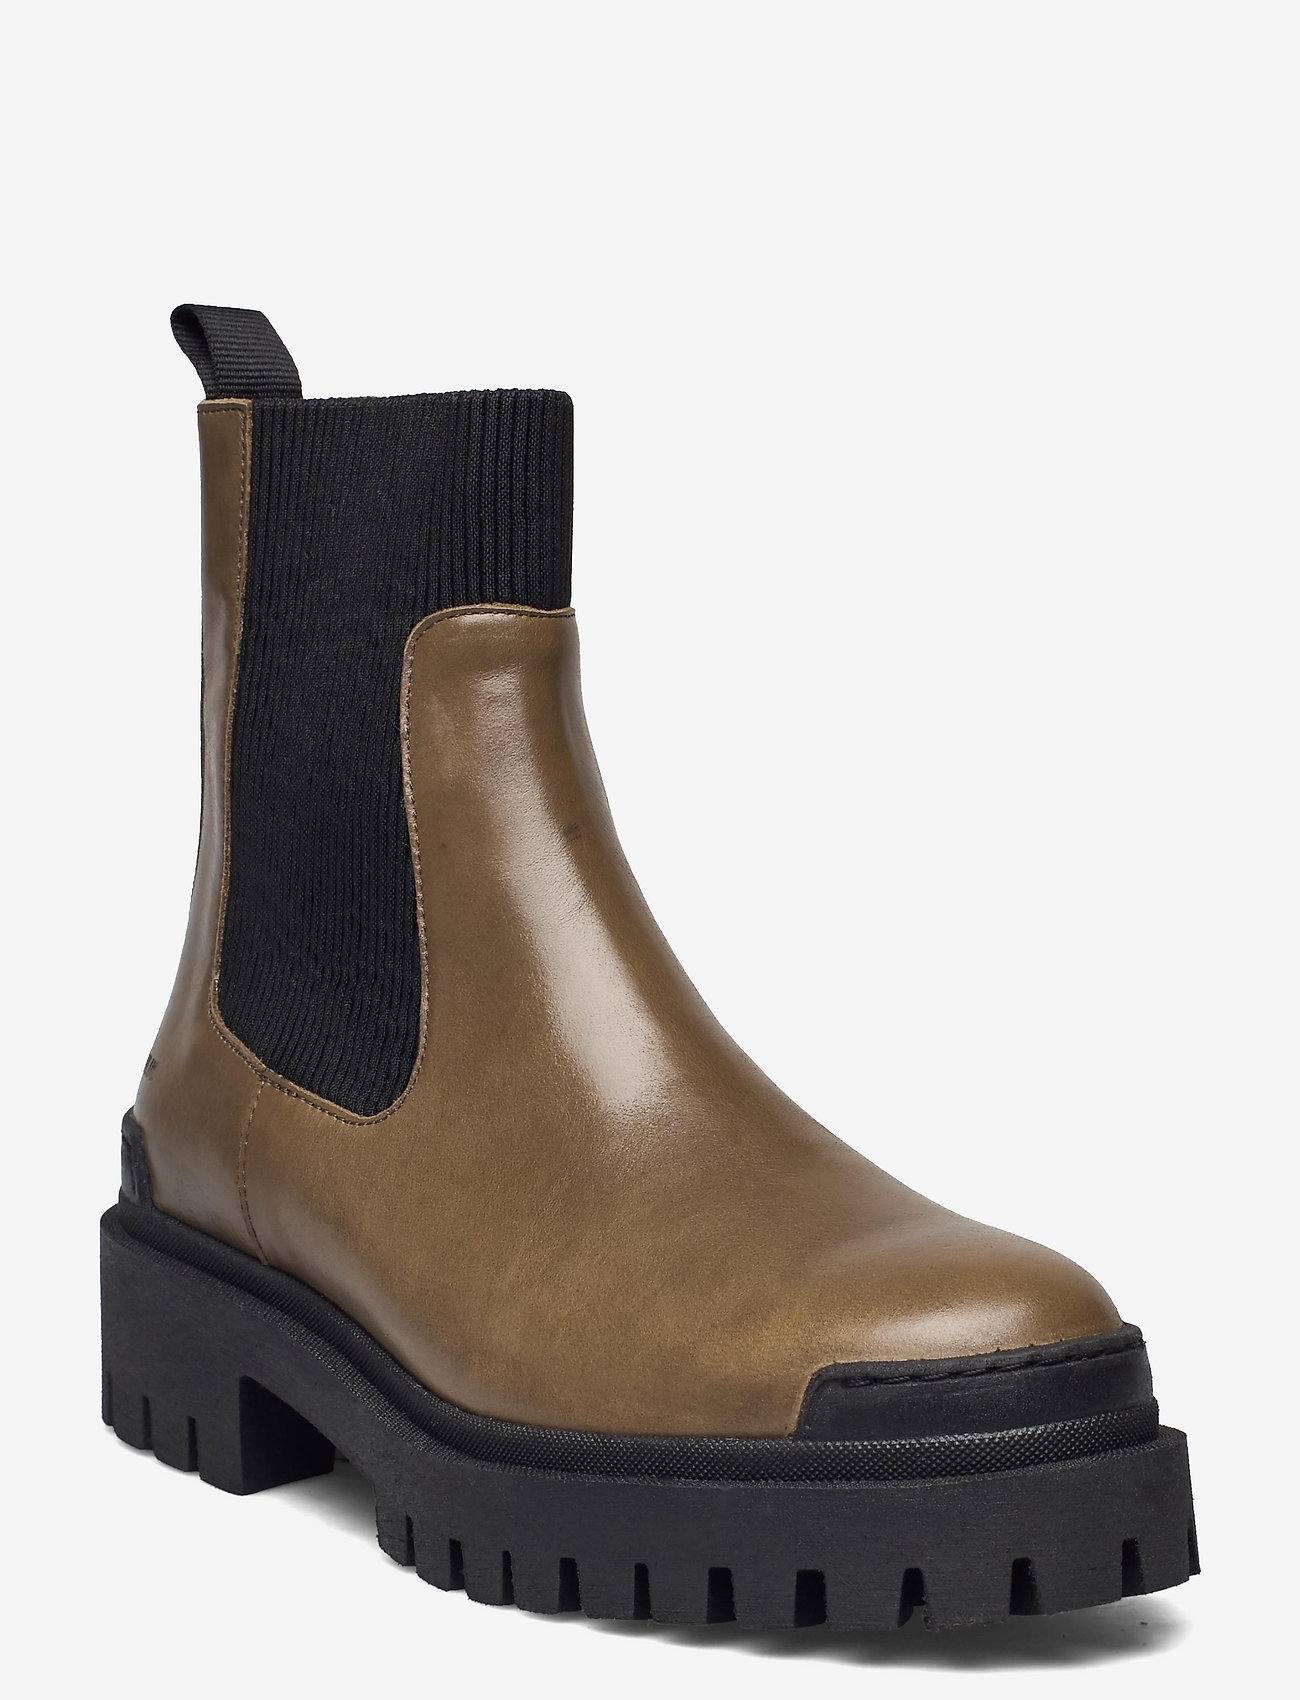 ANGULUS - Boots - flat - nordic style - 1841/019 dark olive/black - 0